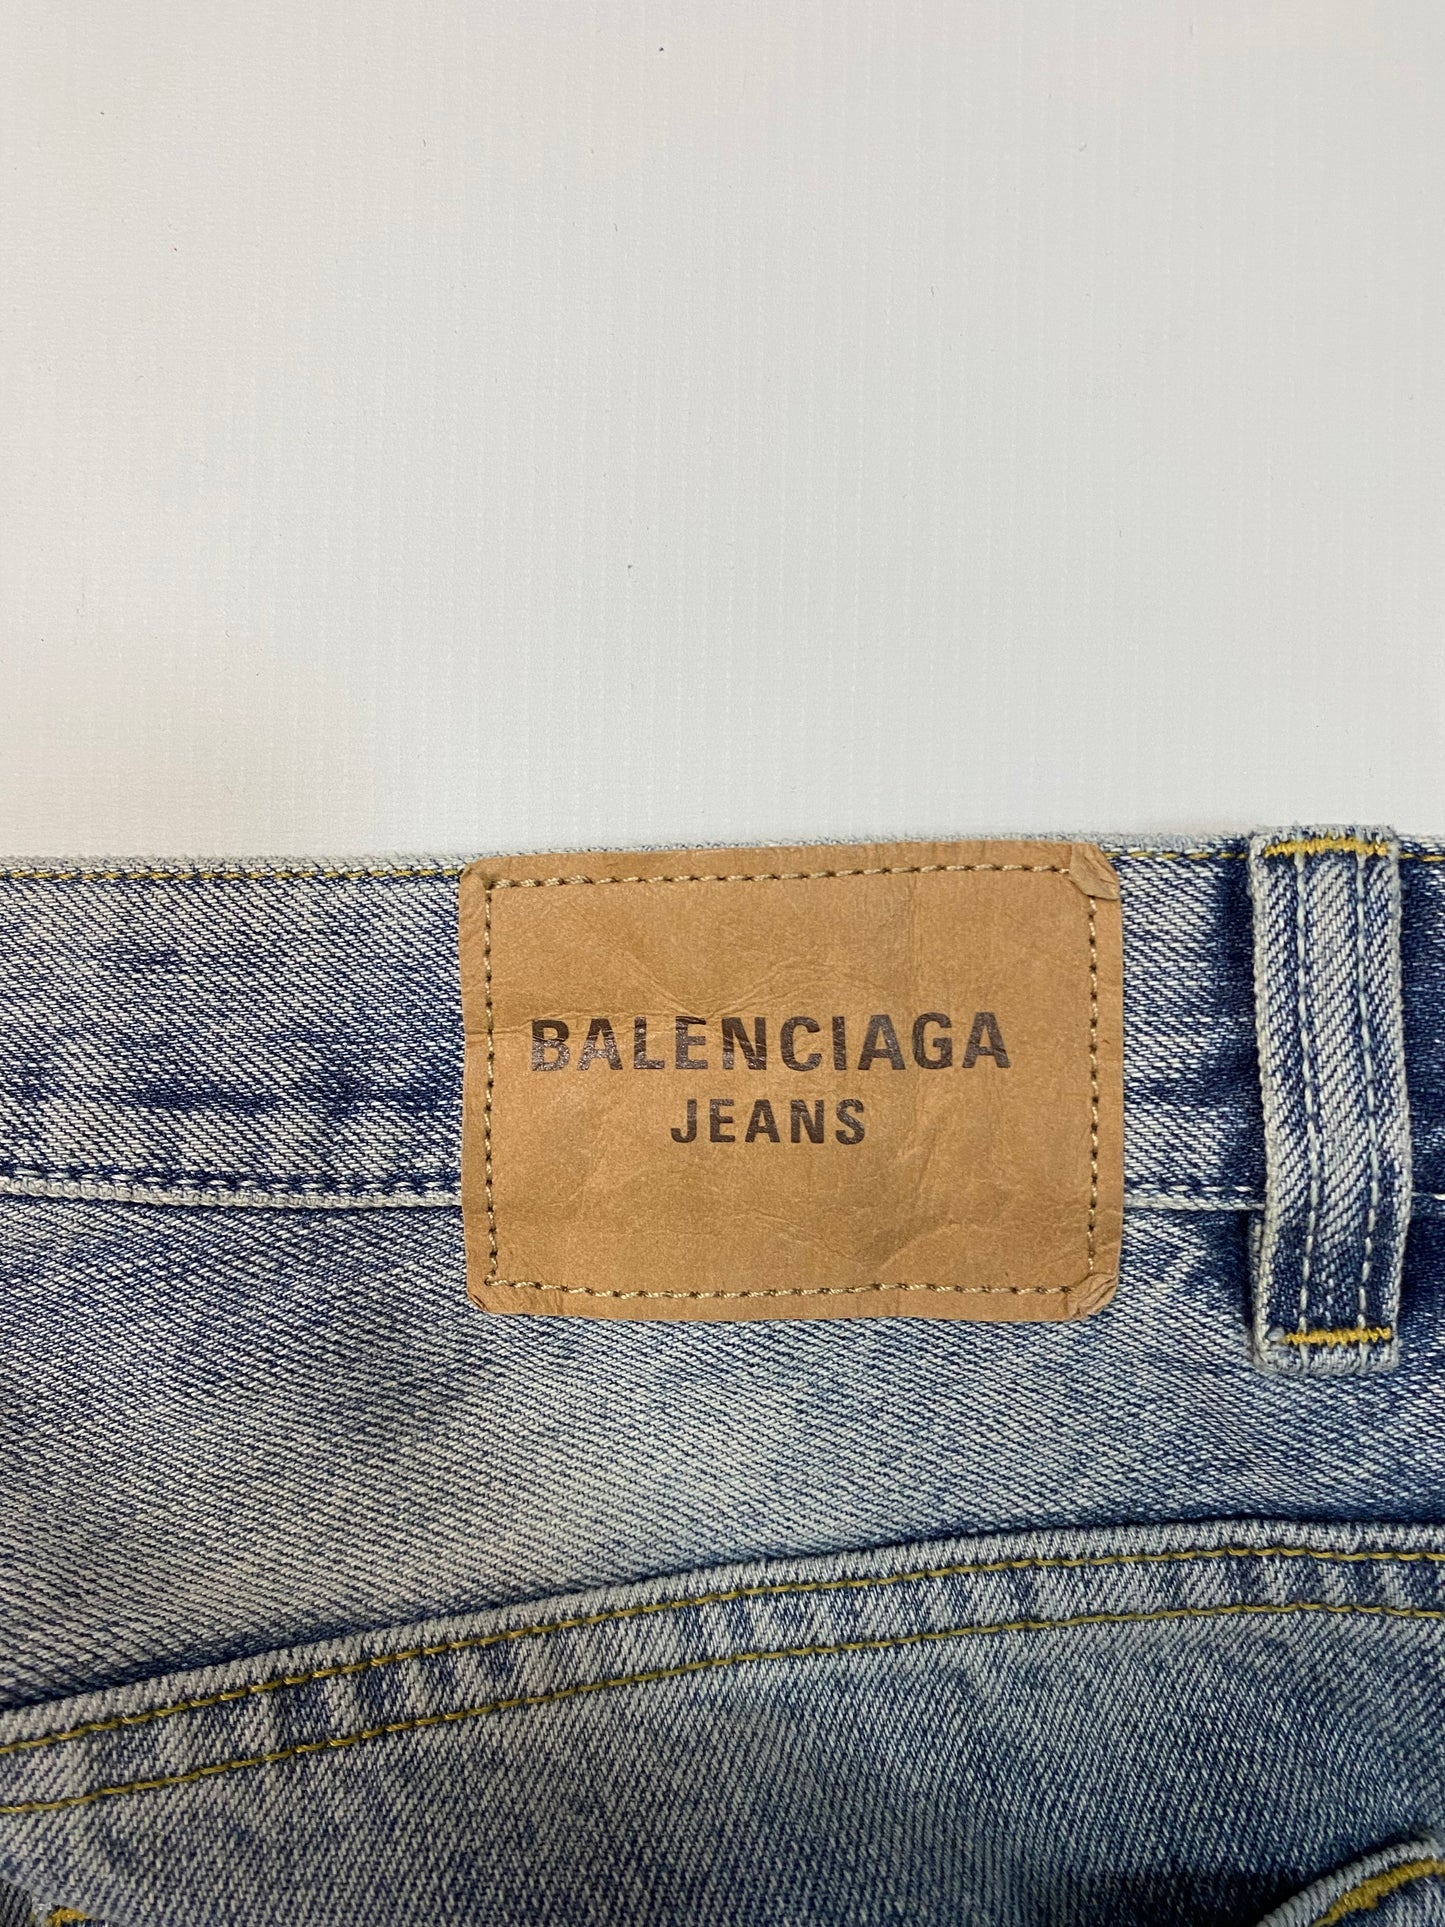 Balenciaga Fall 22 lost tape flared jeans in light Blue SZ:S